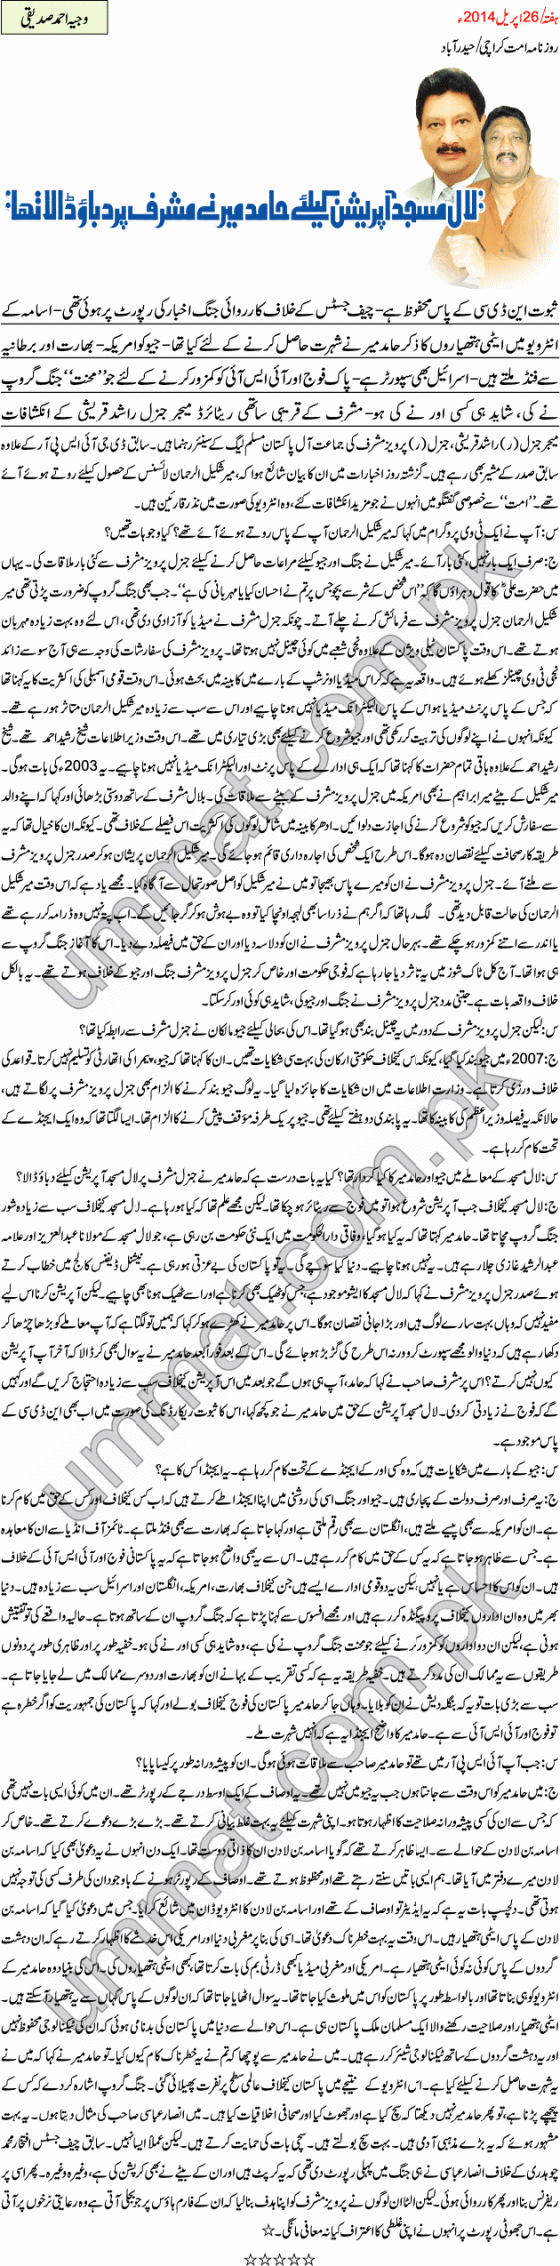 Hamid Mir pressurized Musharraf for Lal Masjid Operation